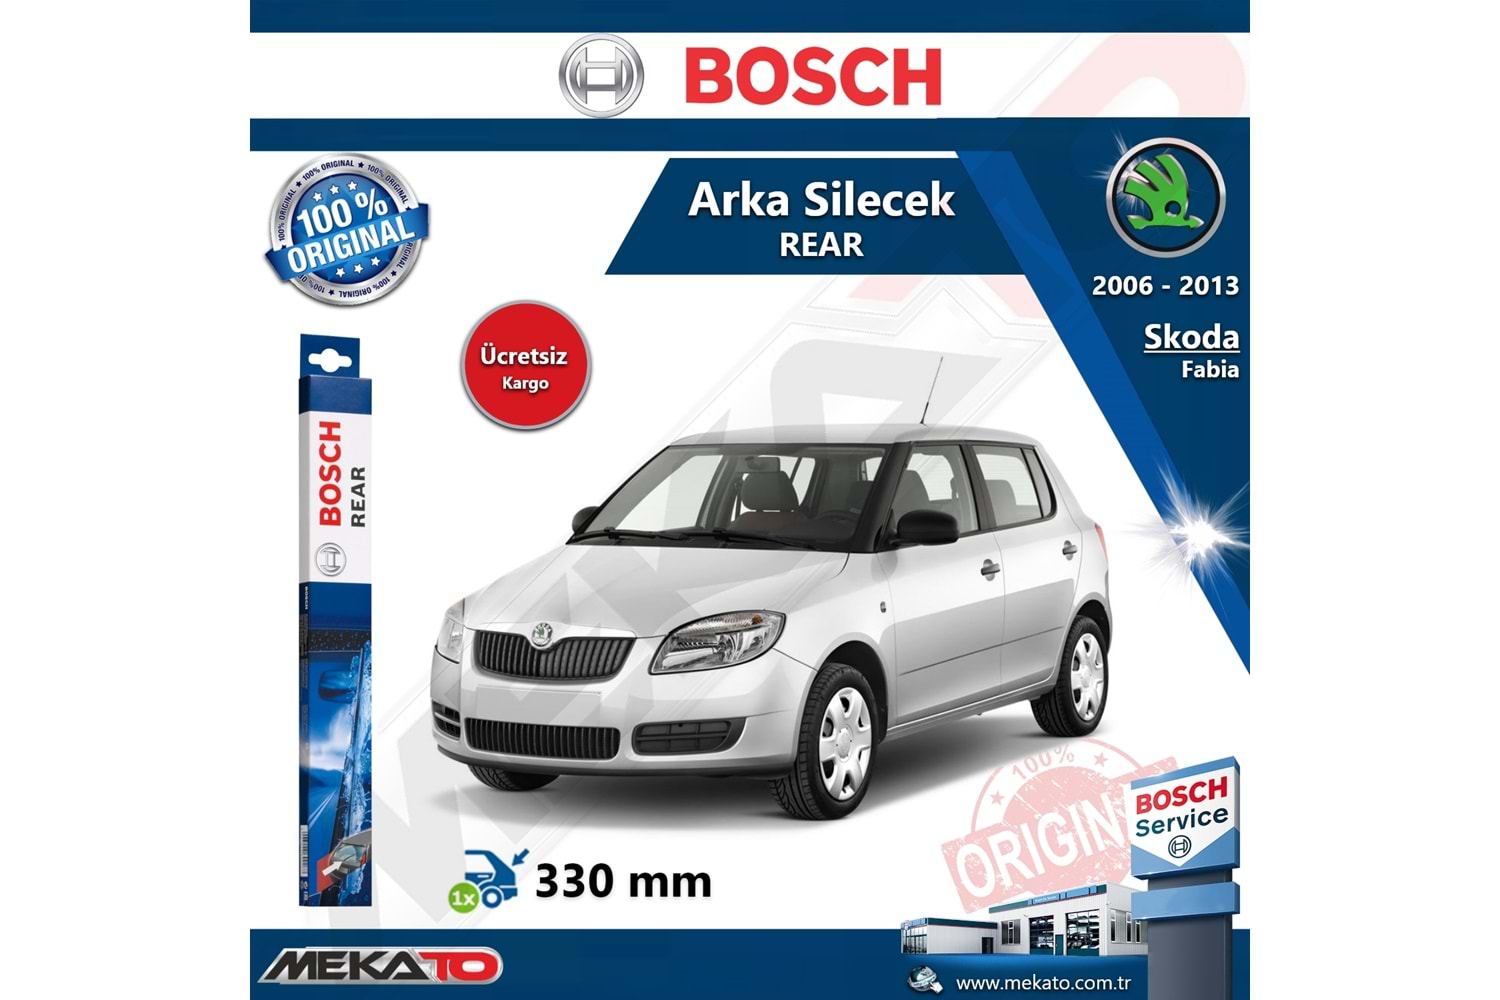 Skoda Fabia Arka Silecek Bosch Rear 2006-2013